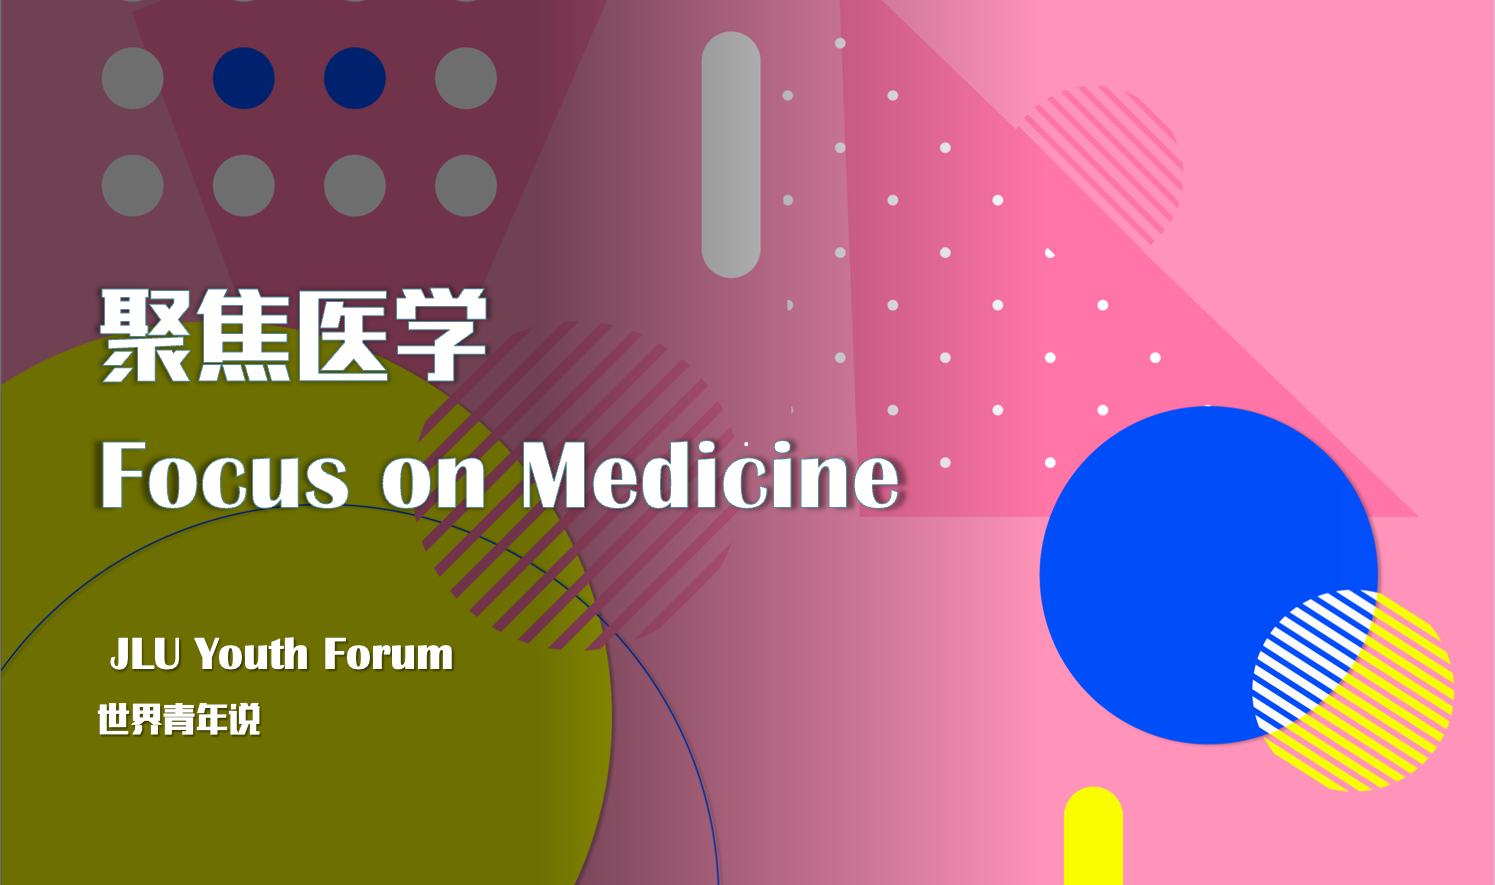 Focus on Medicine - JLU Youth Forum